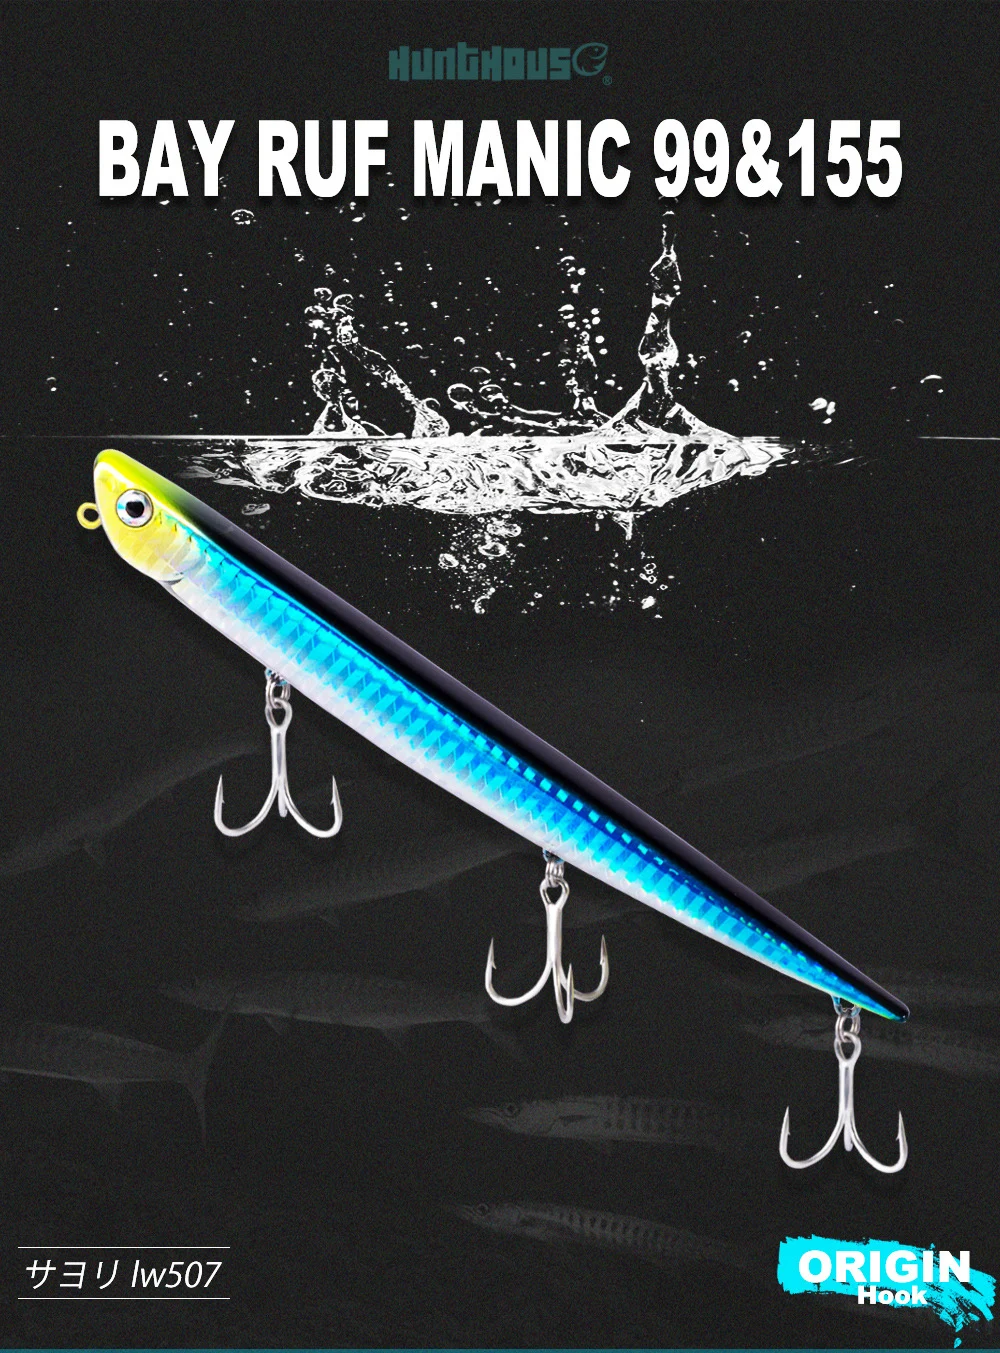 Hunthouse bay ruf manic рыболовная приманка-карандаш Тонущая 99 мм 18,5 г 155 мм 31,5 г крючок происхождения для морского окуня